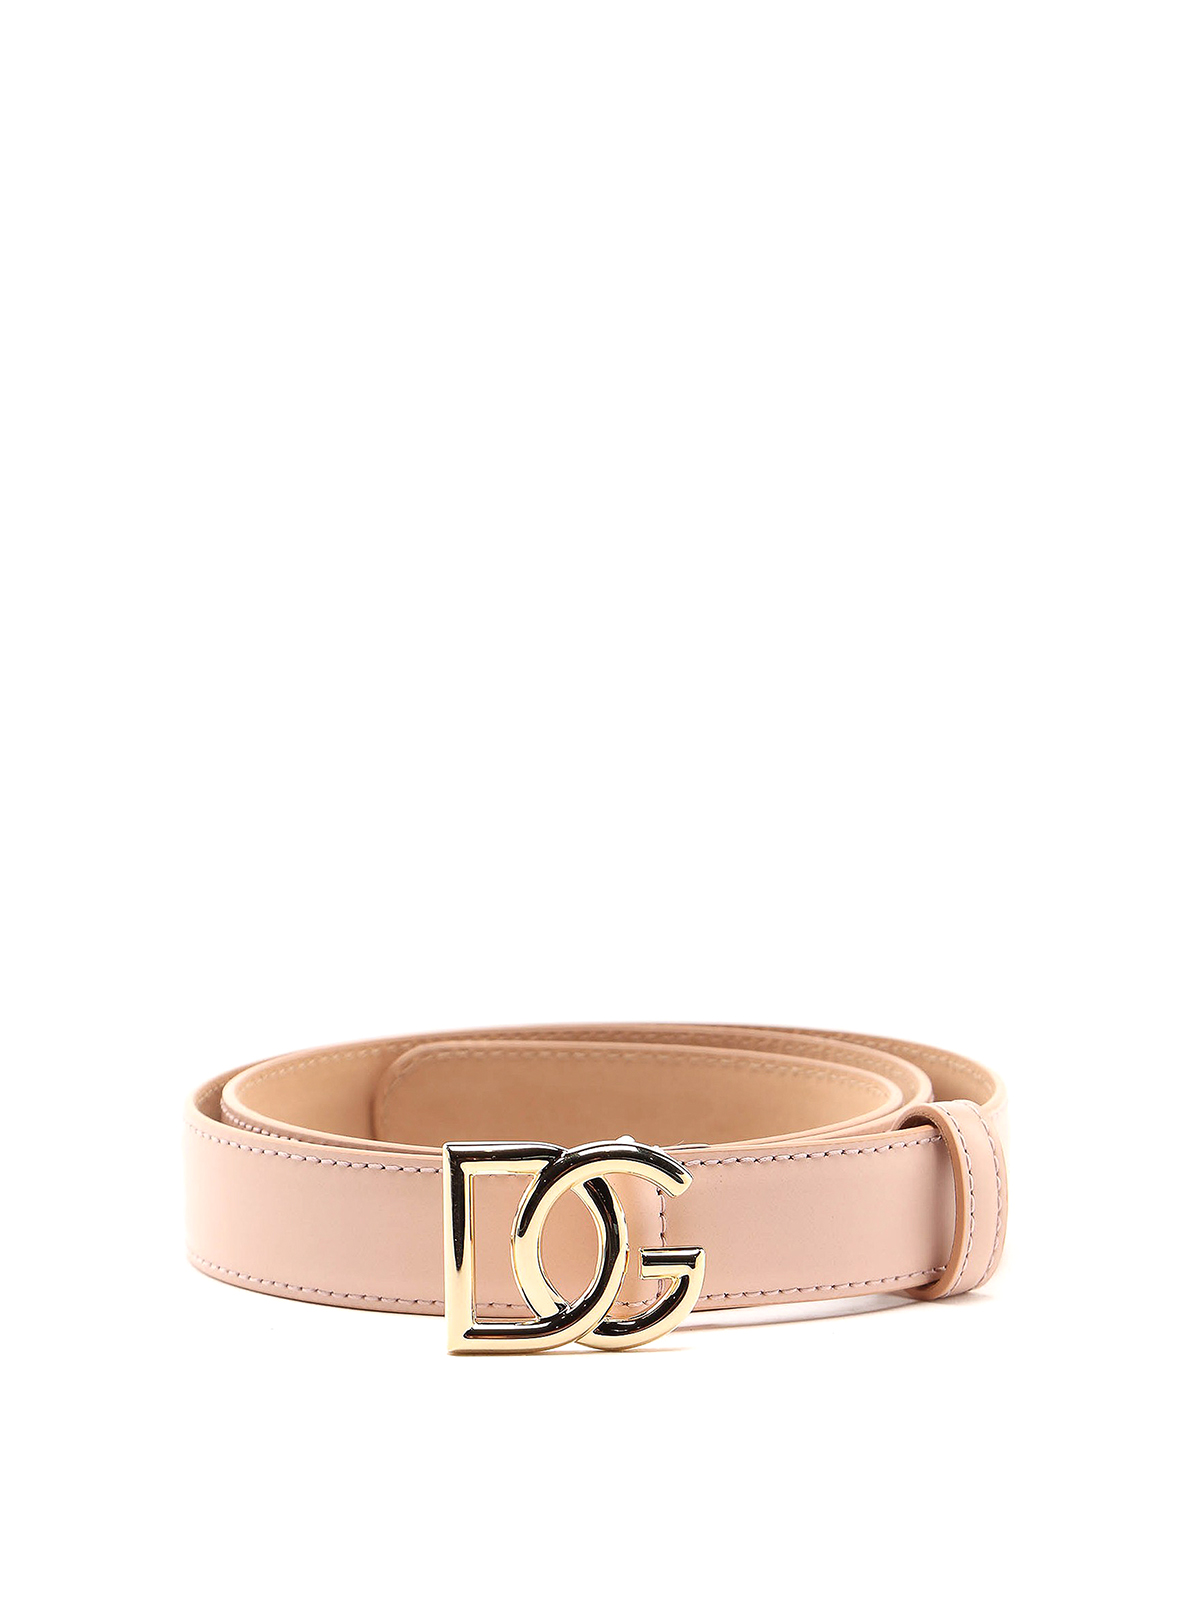 Dolce & Gabbana Dg Millennials Leather Belt In Light Pink